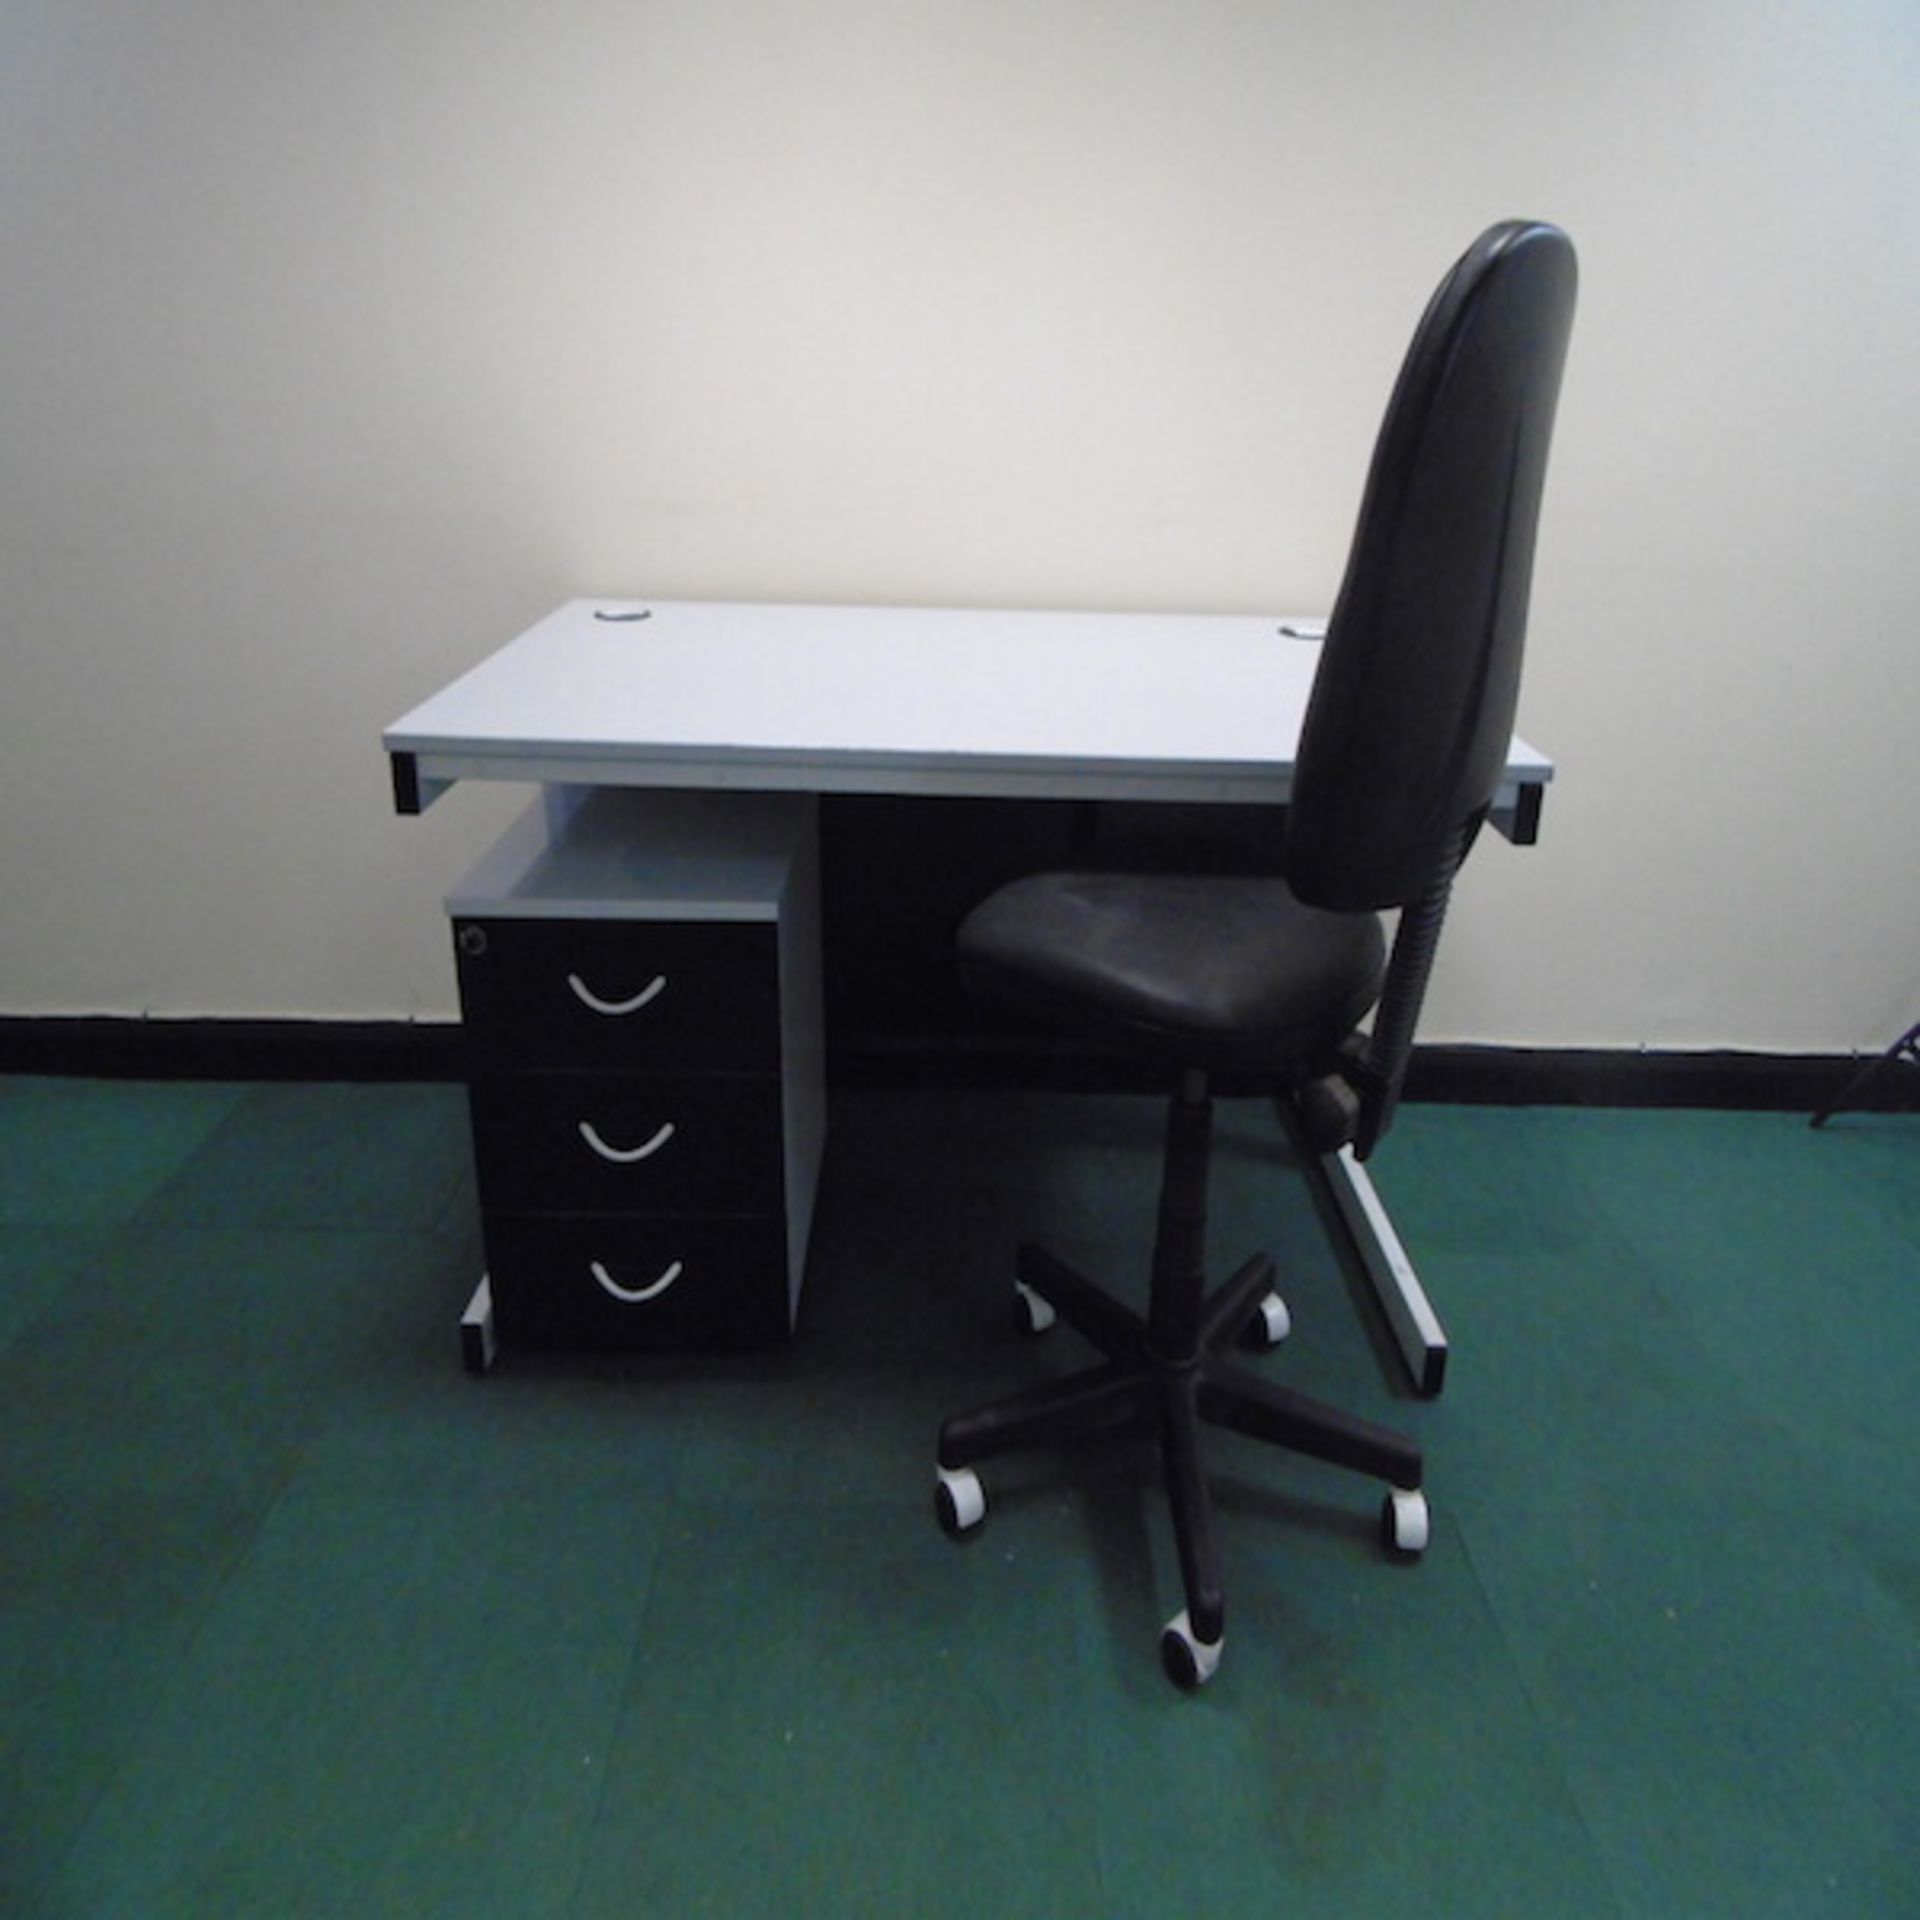 White/Black Office Setup - Desk / Drawers / Chair